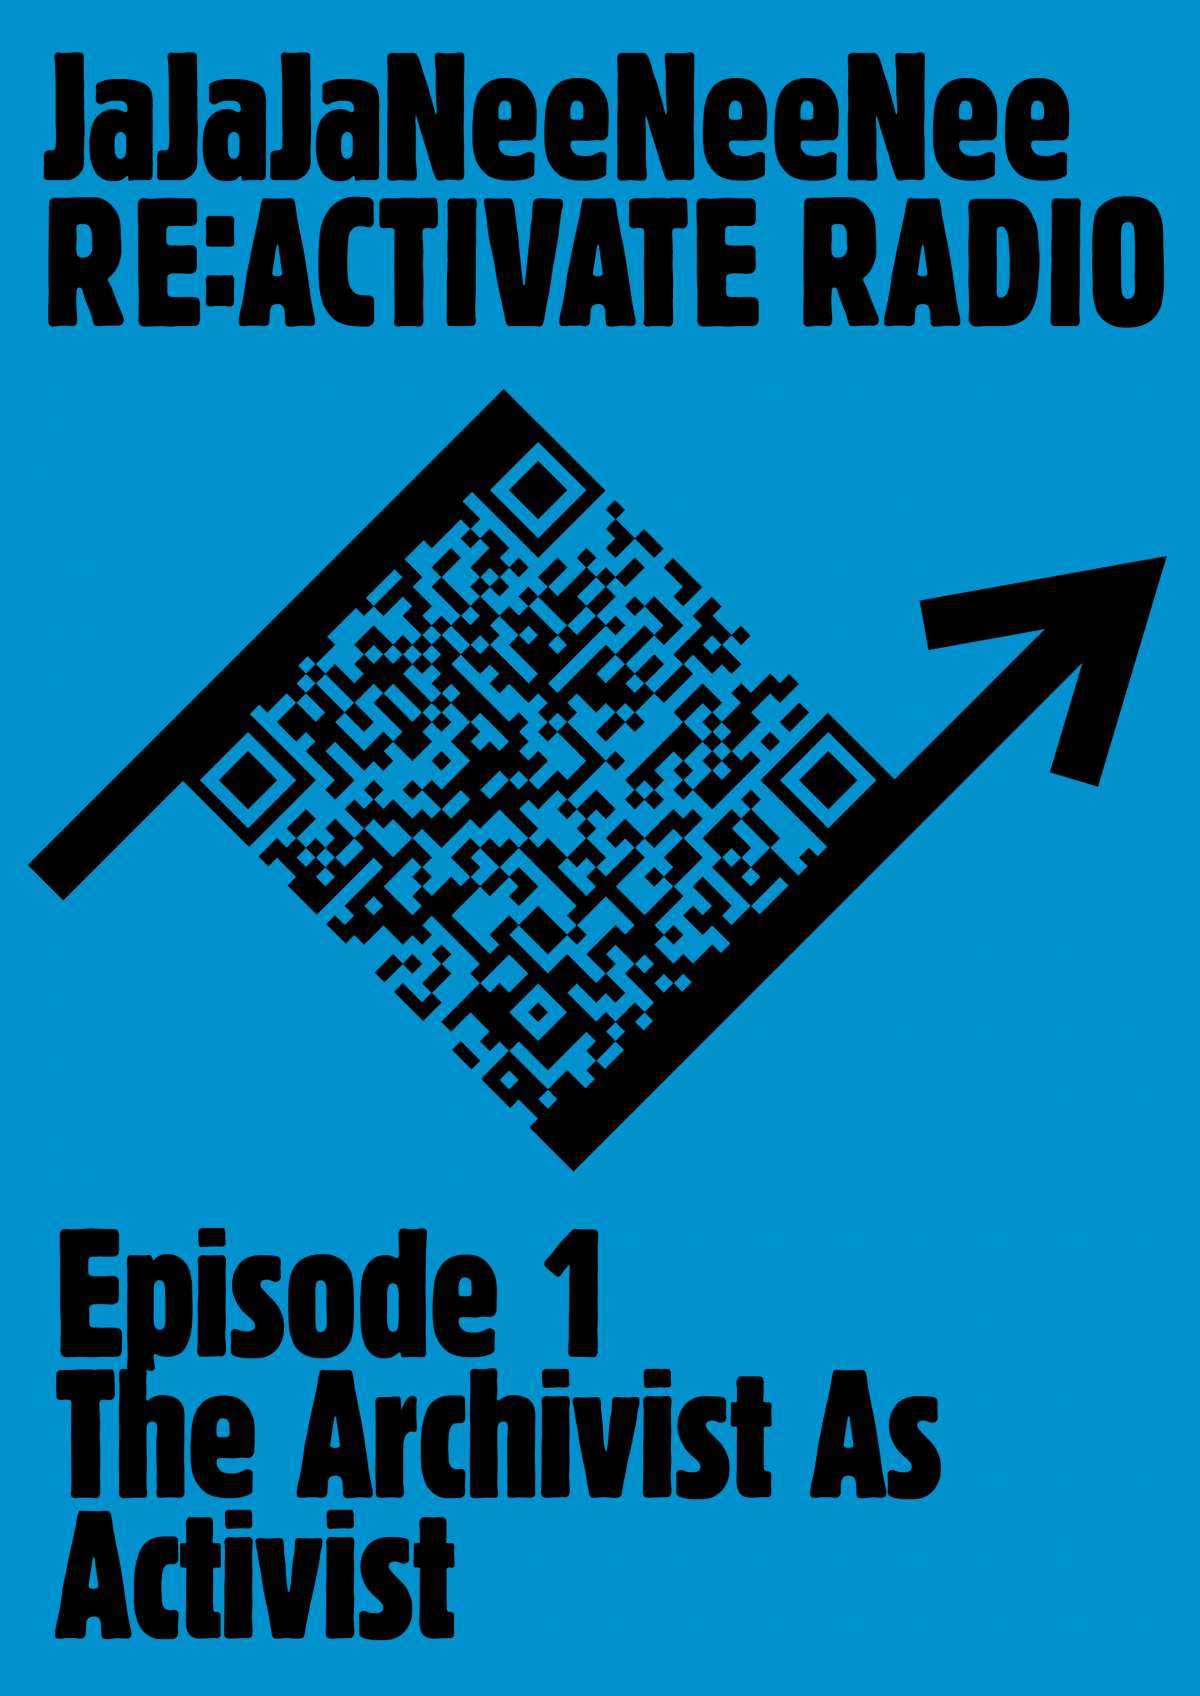 REACTIVATE RADIO Episode 1 Open Archief picture